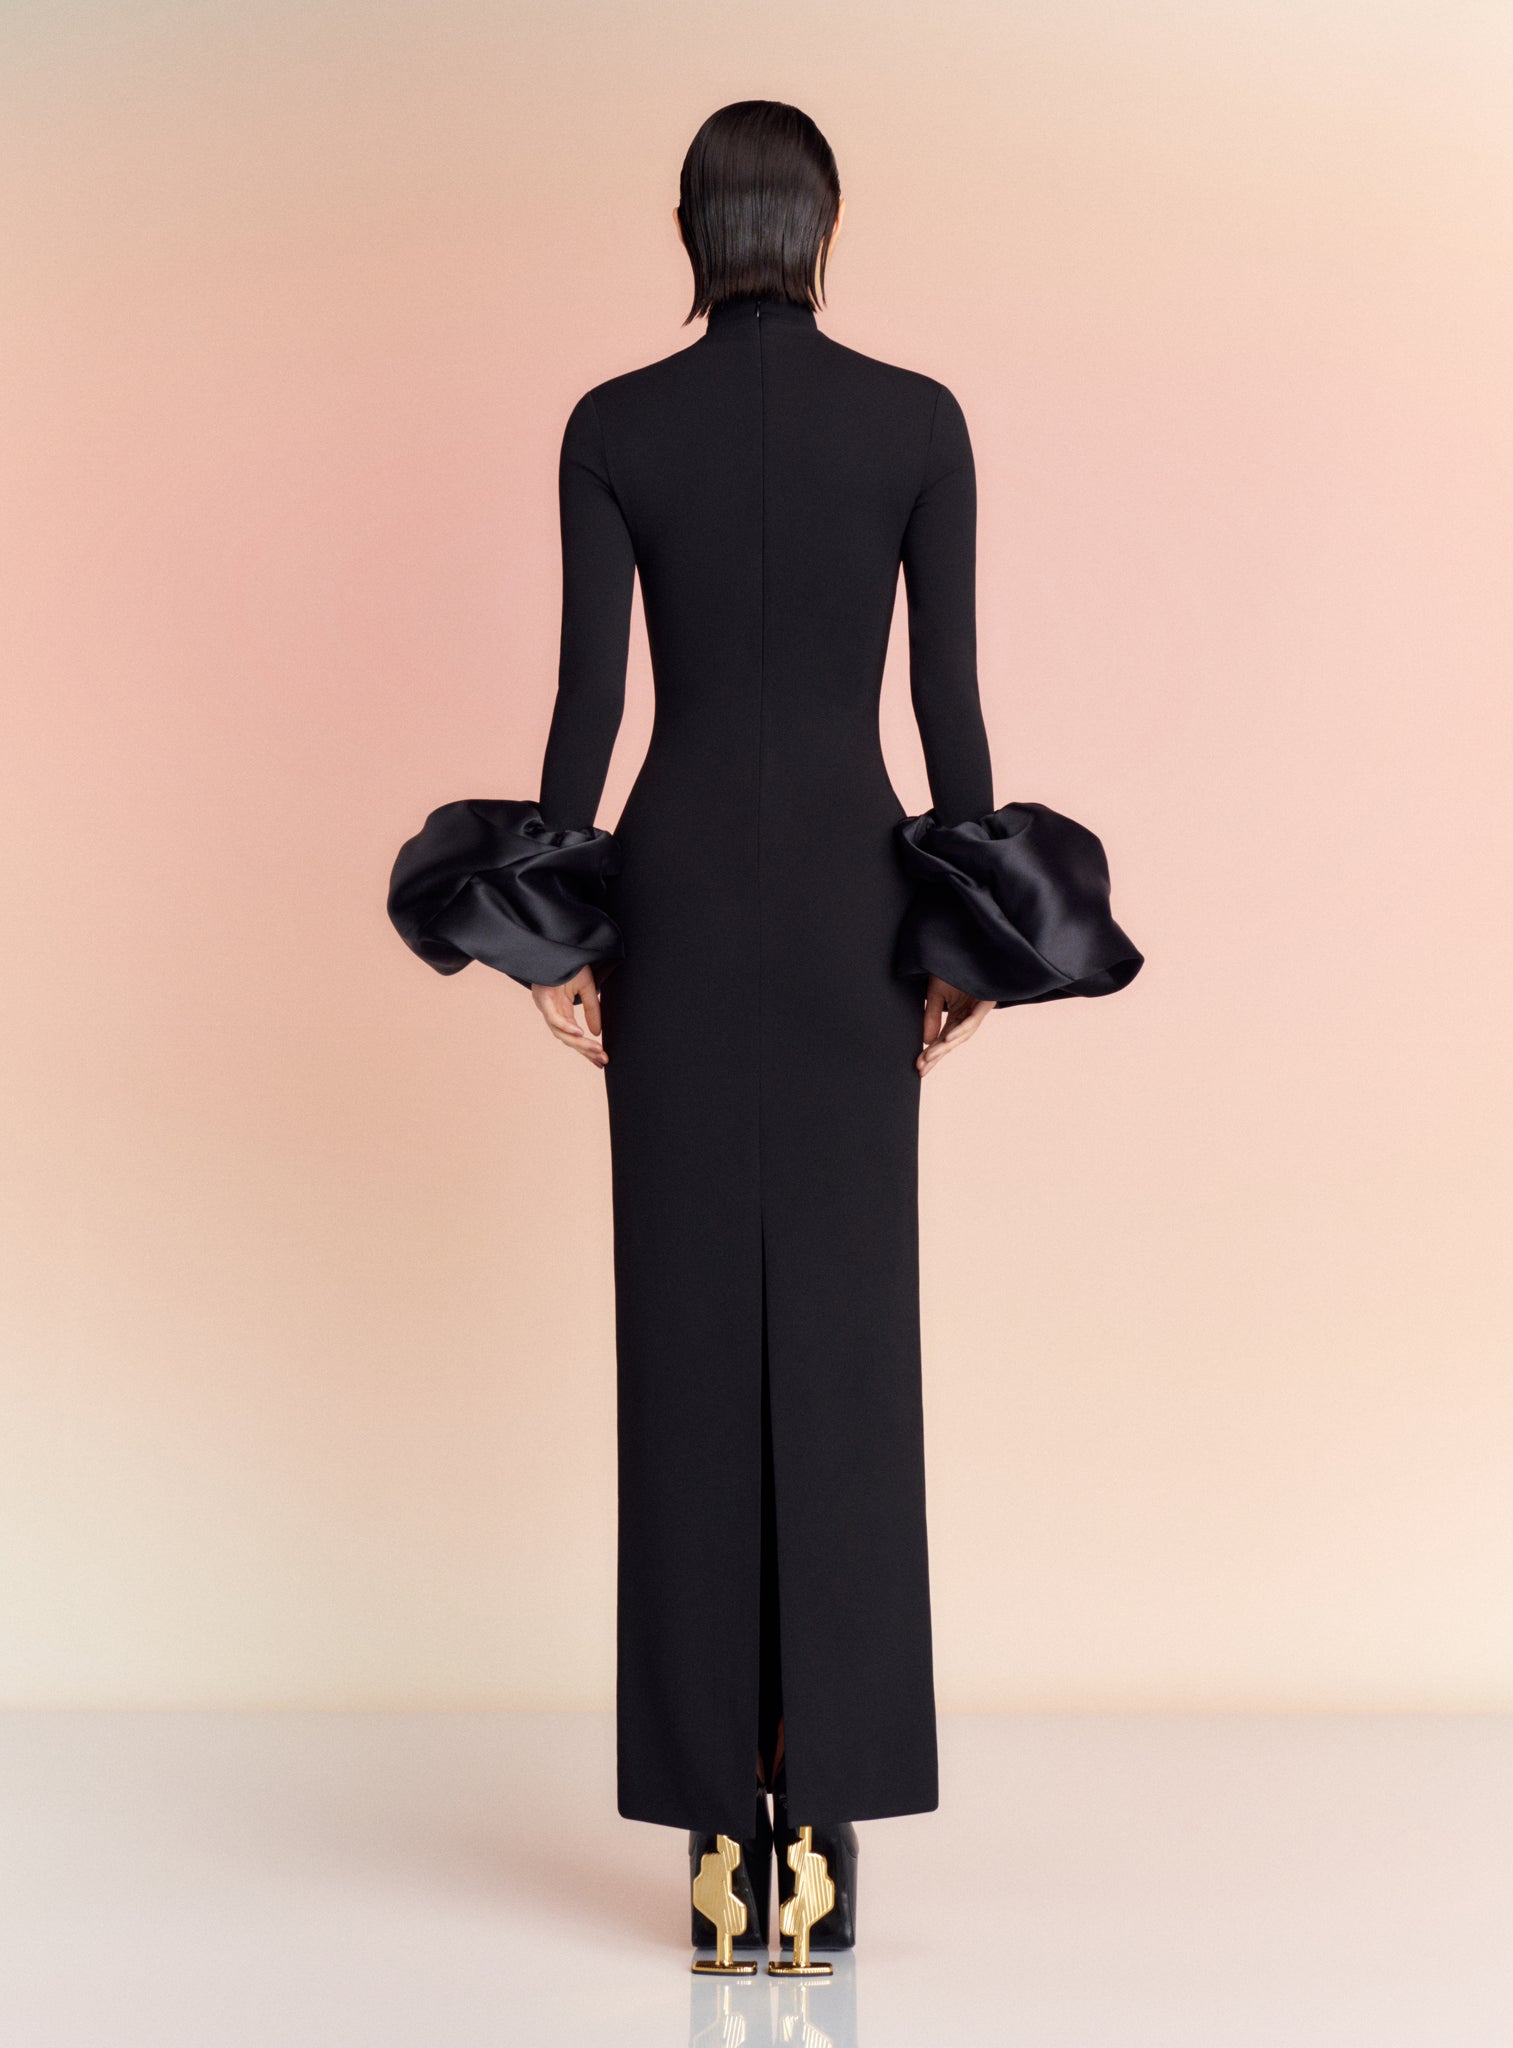 The Viviana Maxi Dress in Black